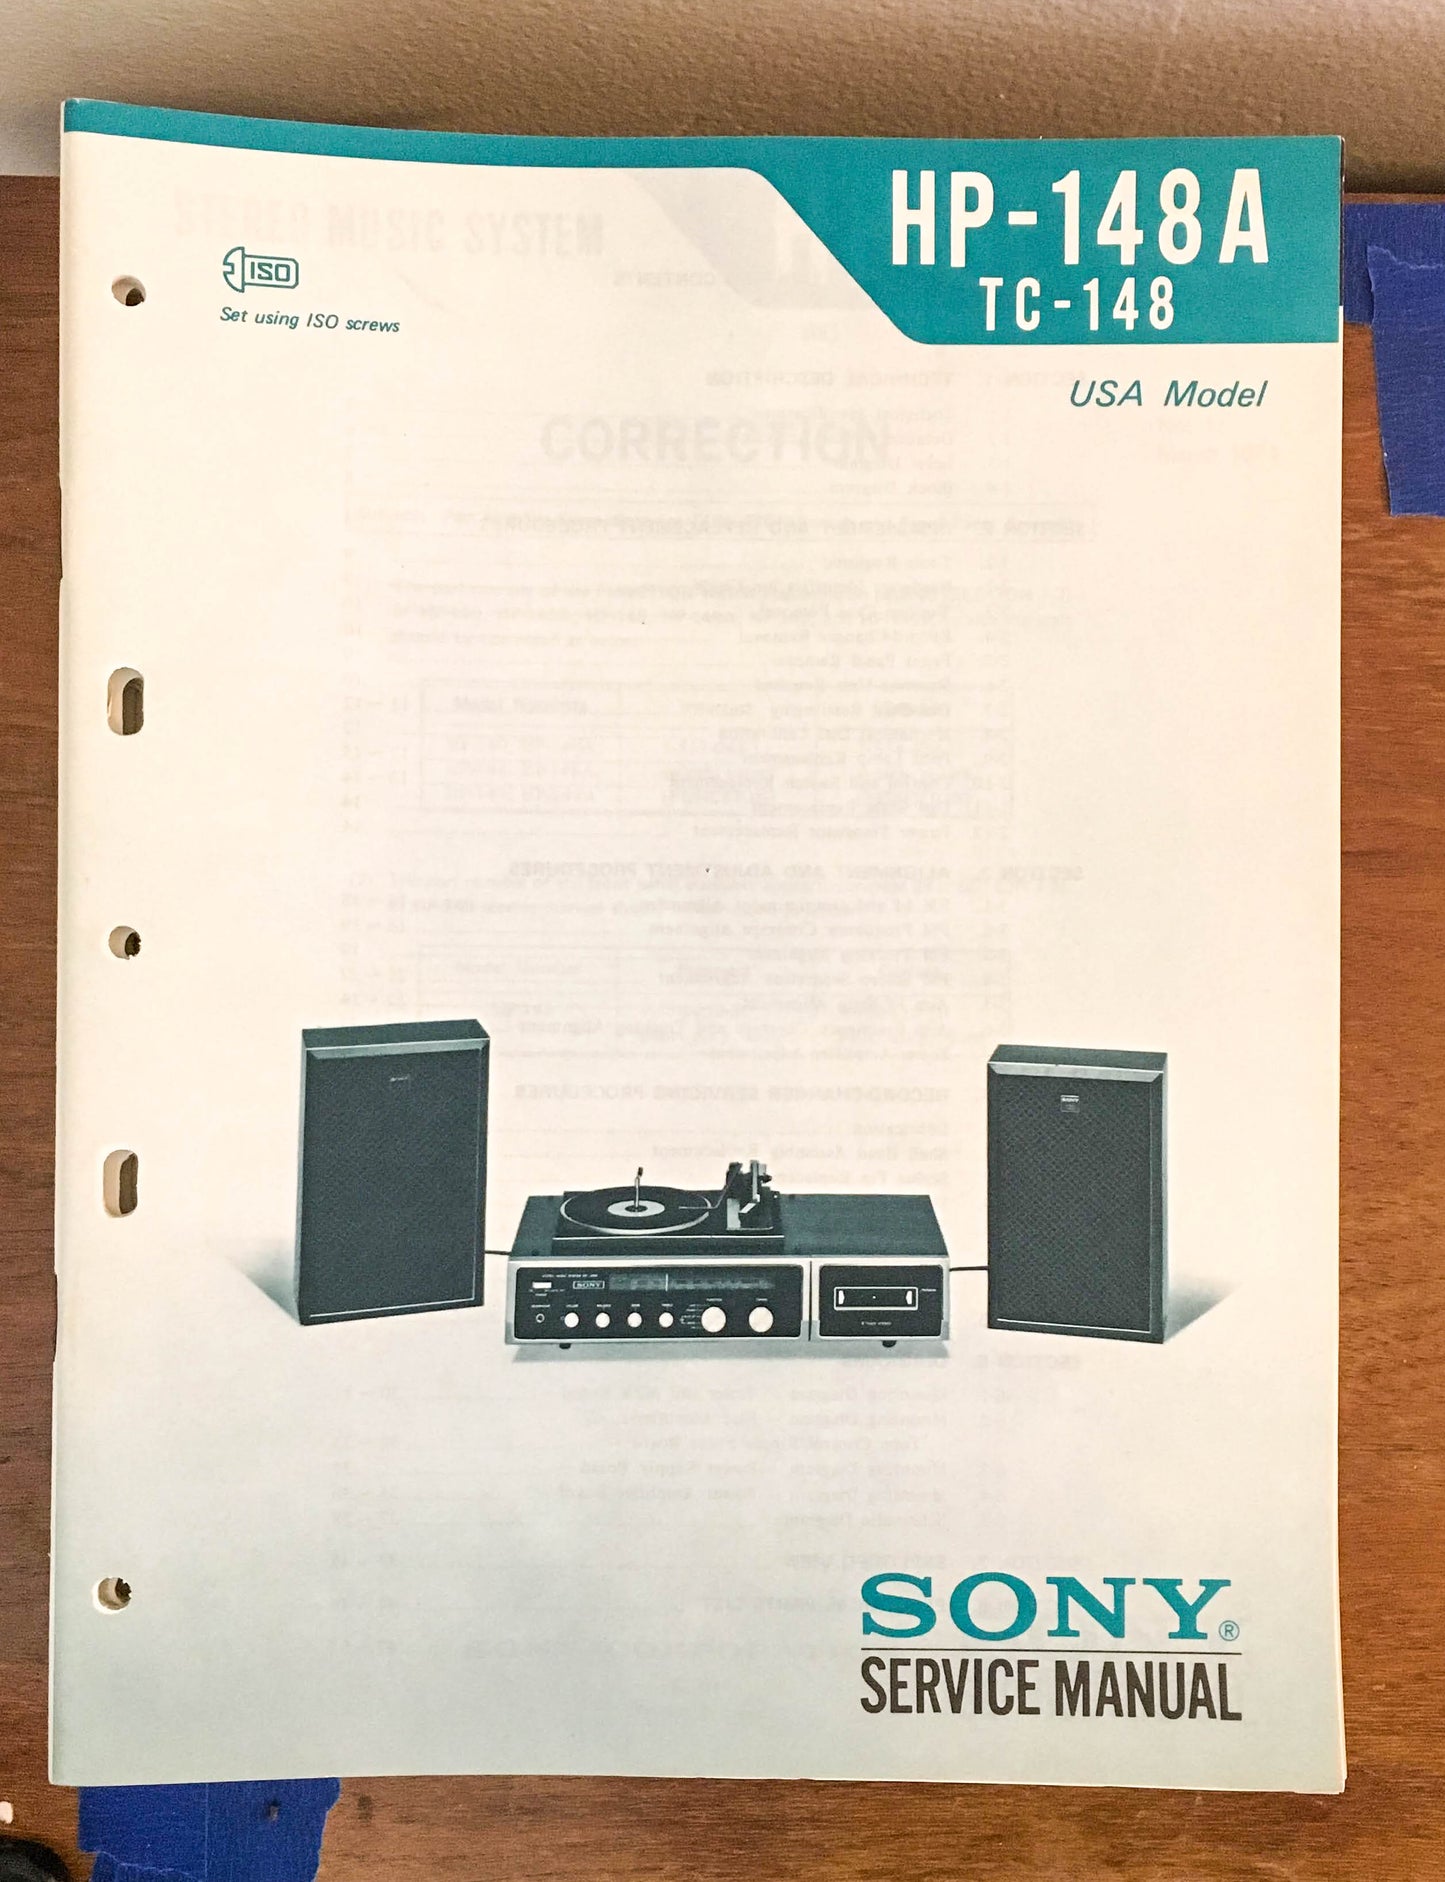 Sony HP-148A TC-148 Stereo Music System Service Manual *Original*